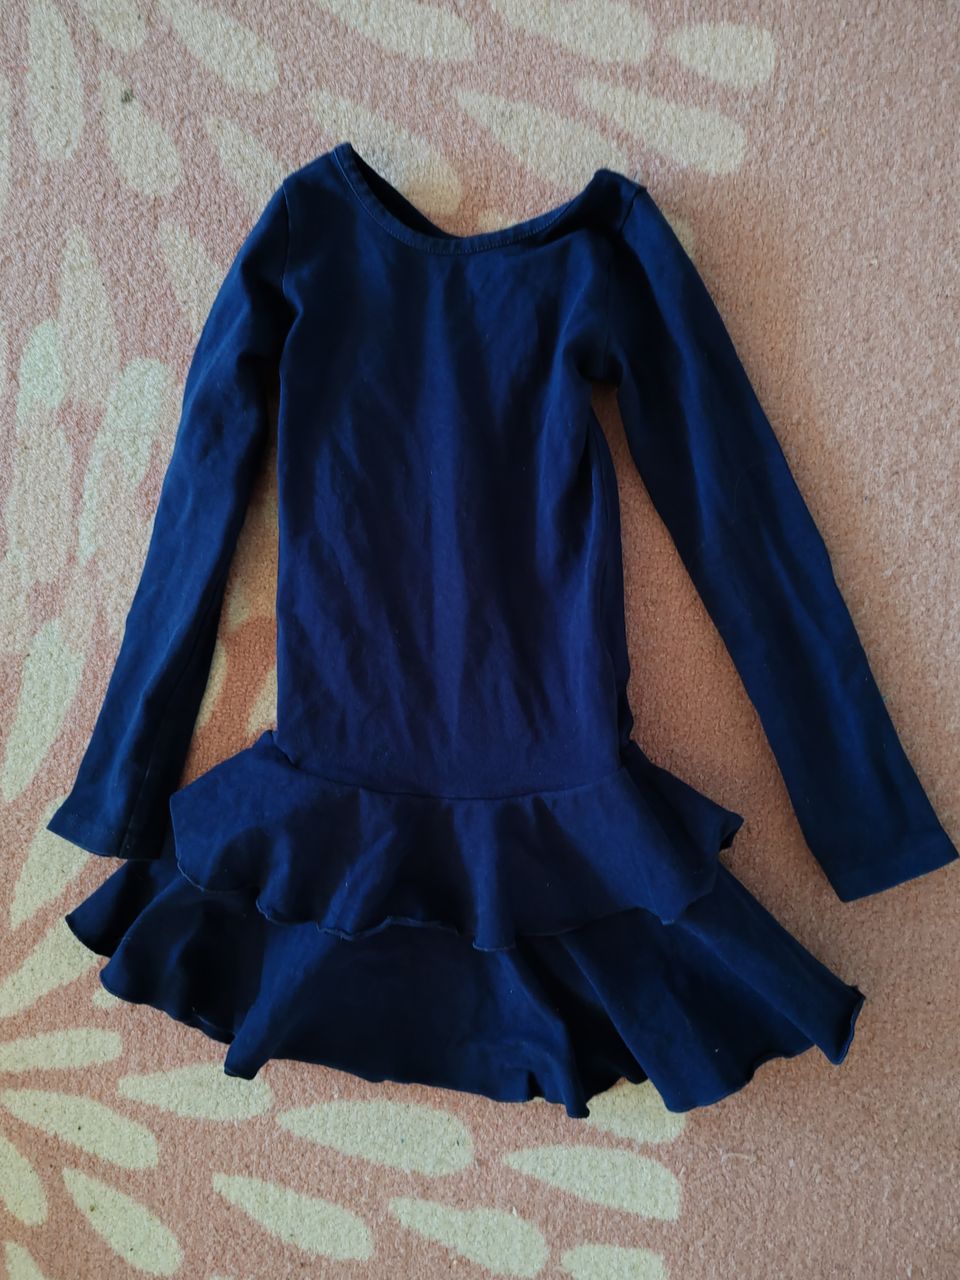 Tummansinen Gugguu mekko, koko:98cm